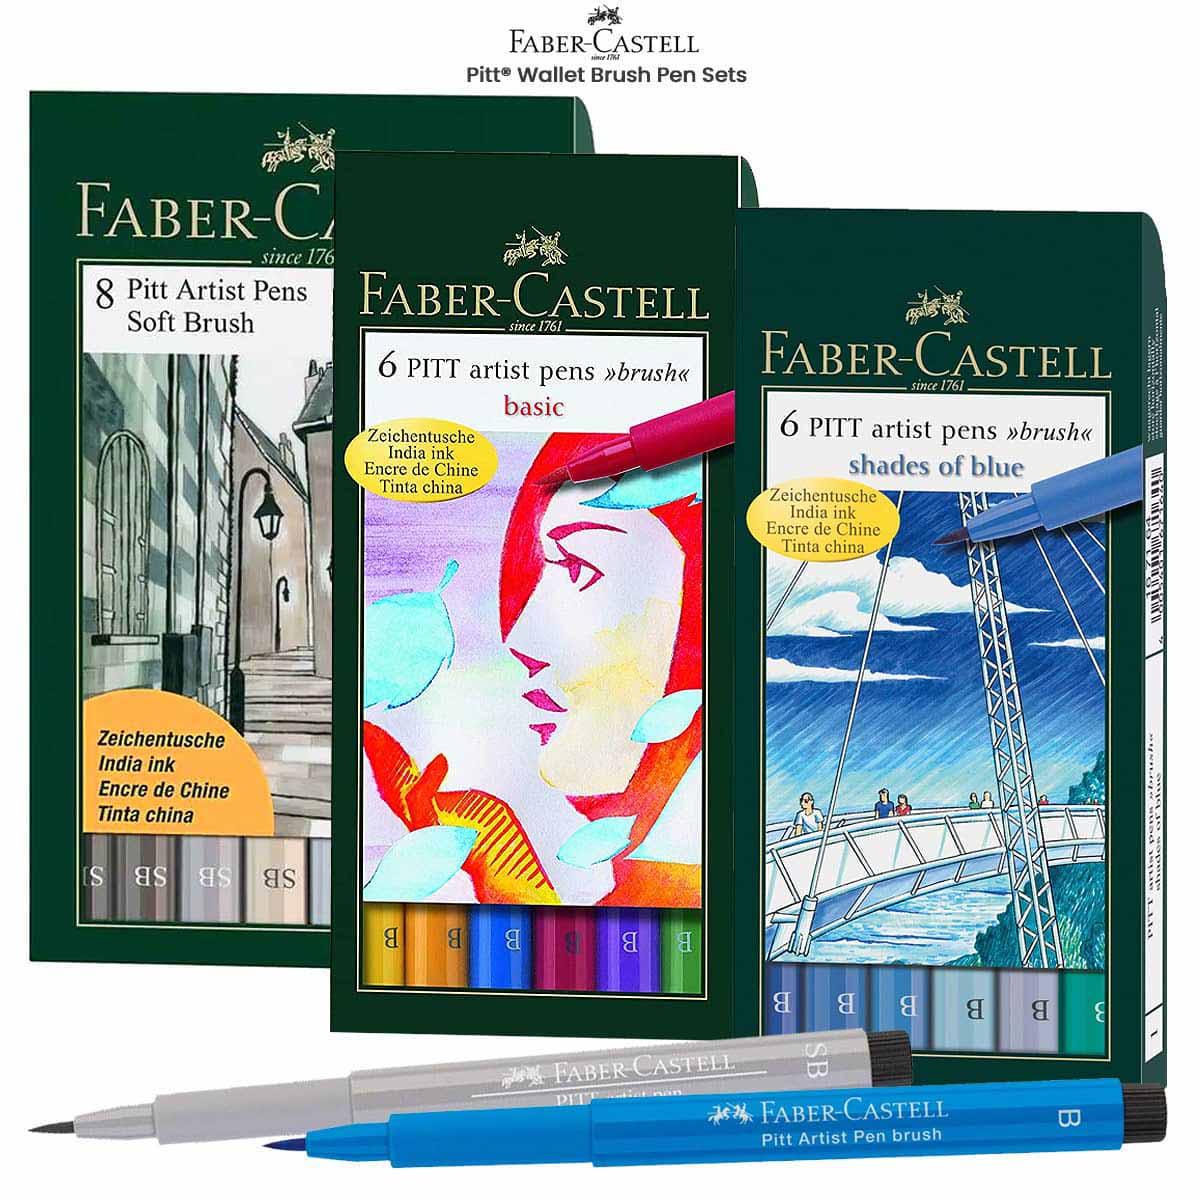 Faber-Castell Pitt Brush Pen Wallet Sets